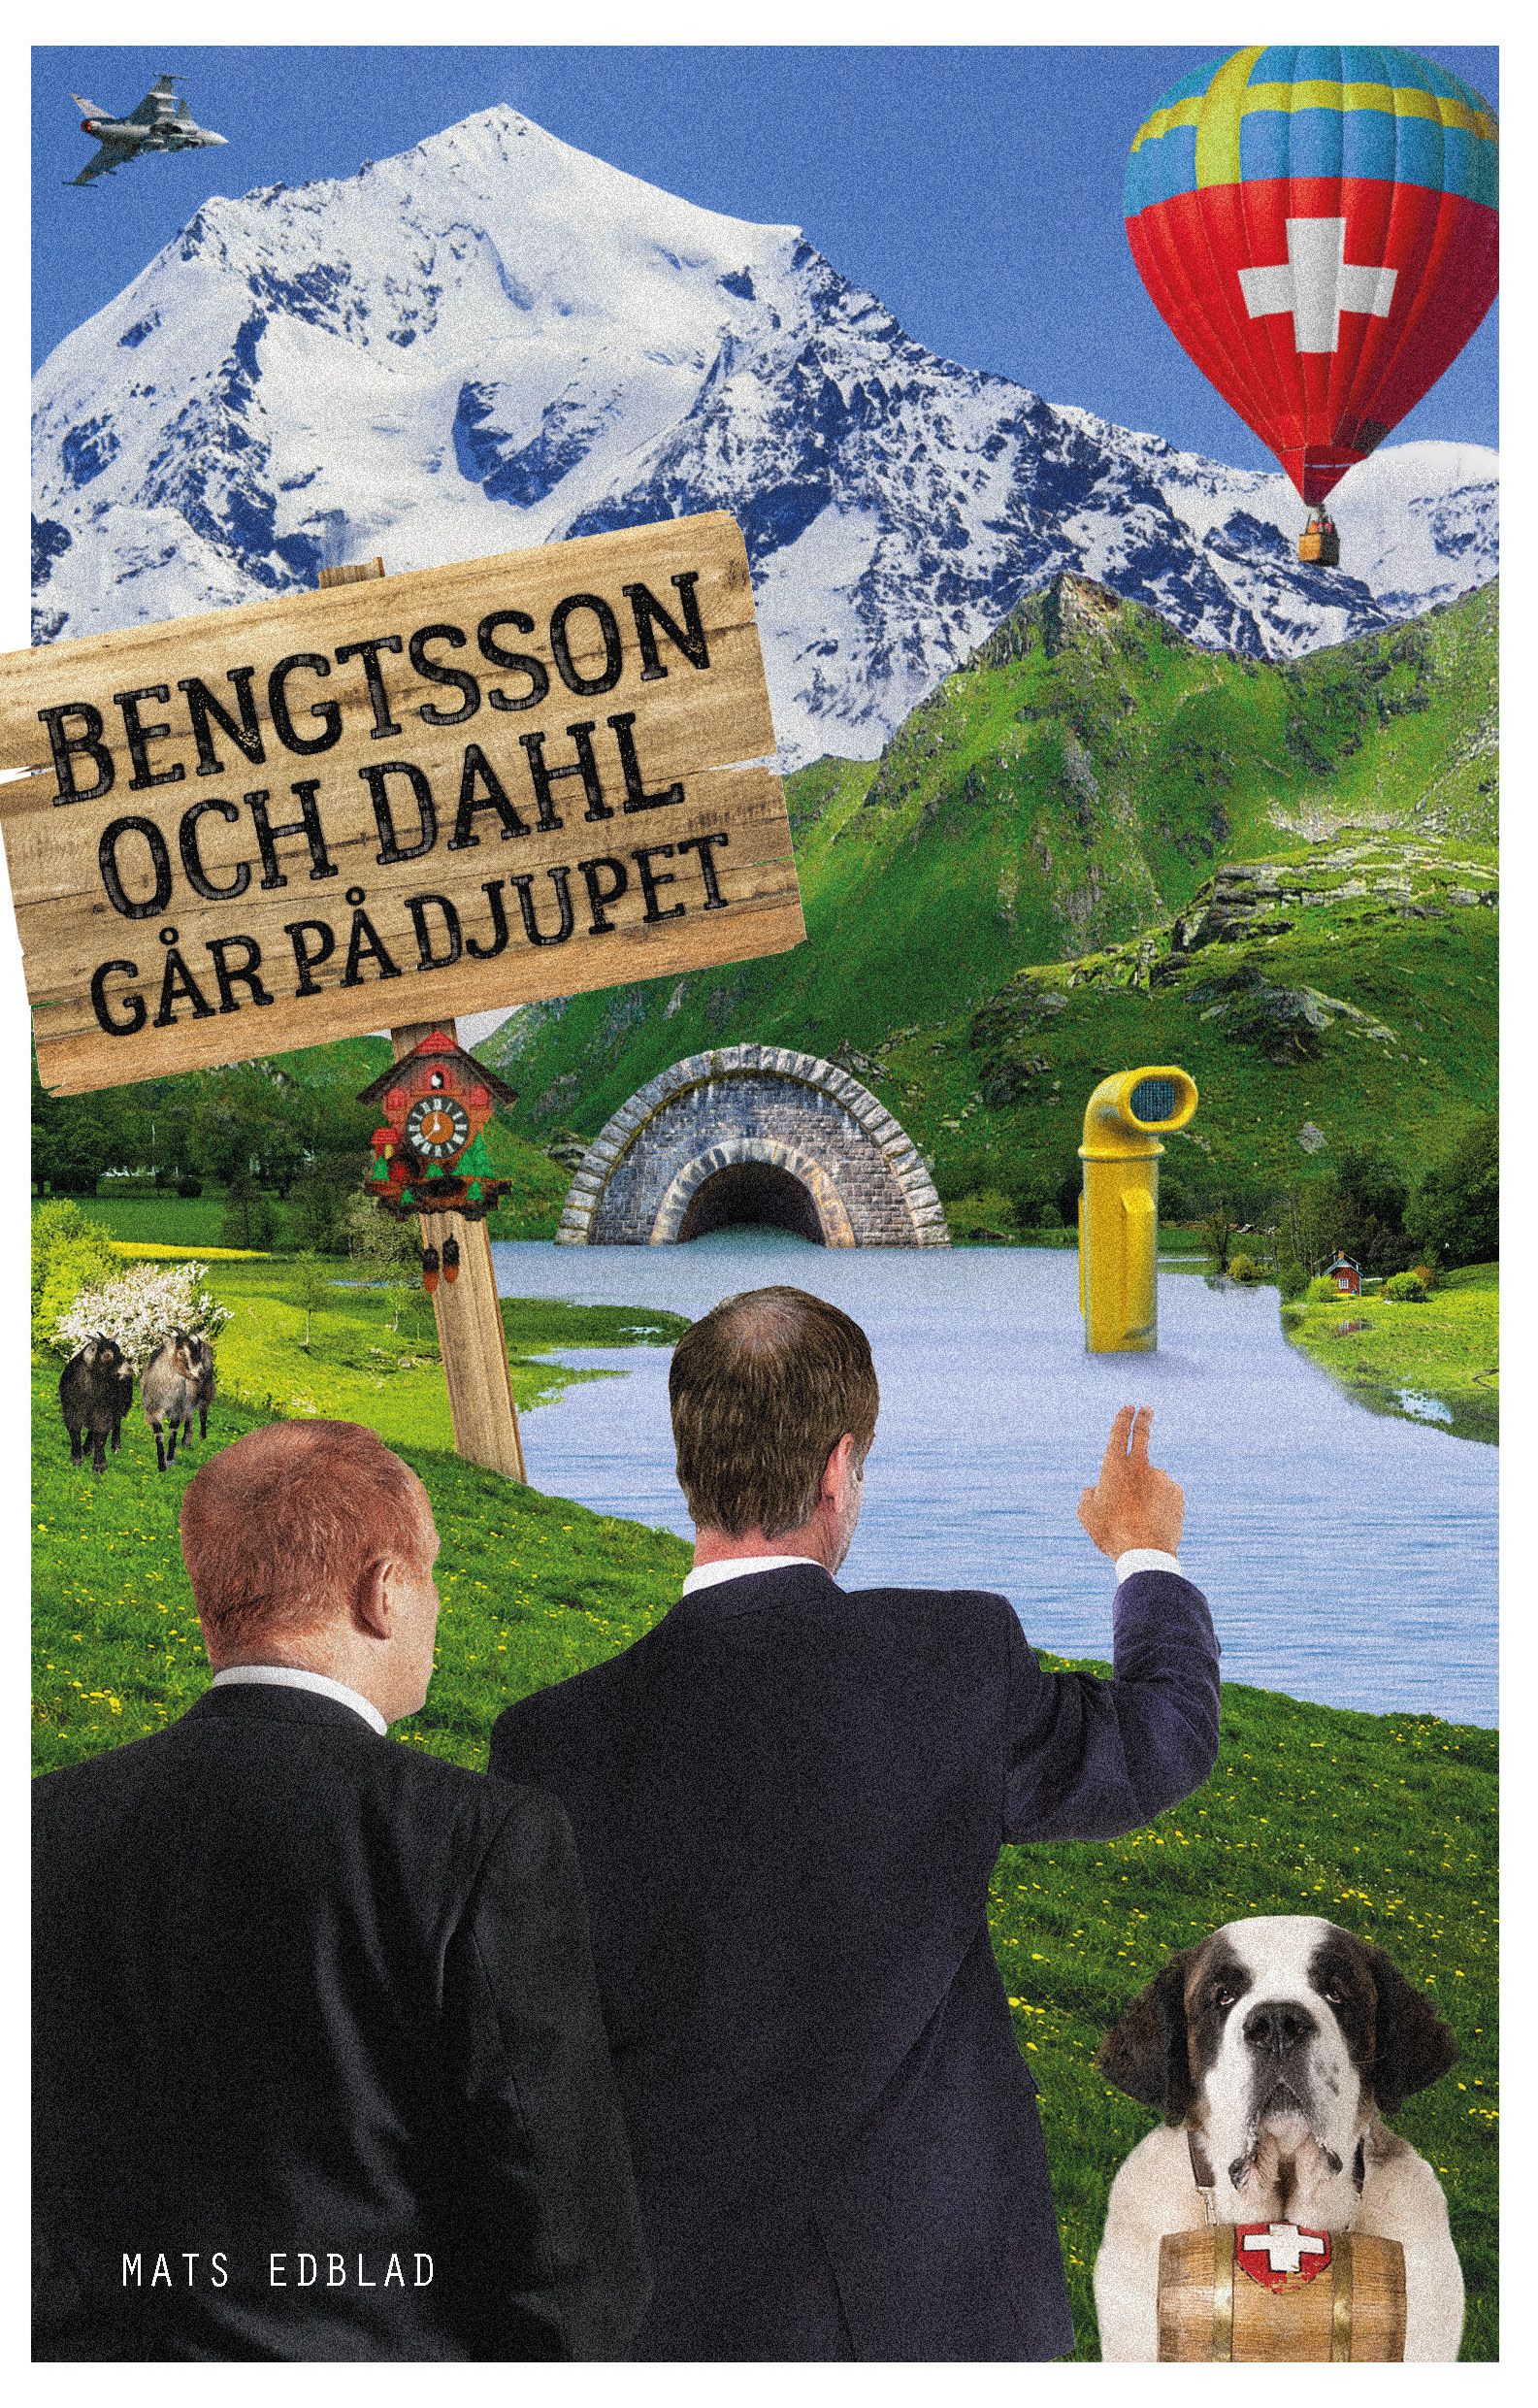 Bengtsson och Dahl går på djupet, e-bok av Mats Edblad